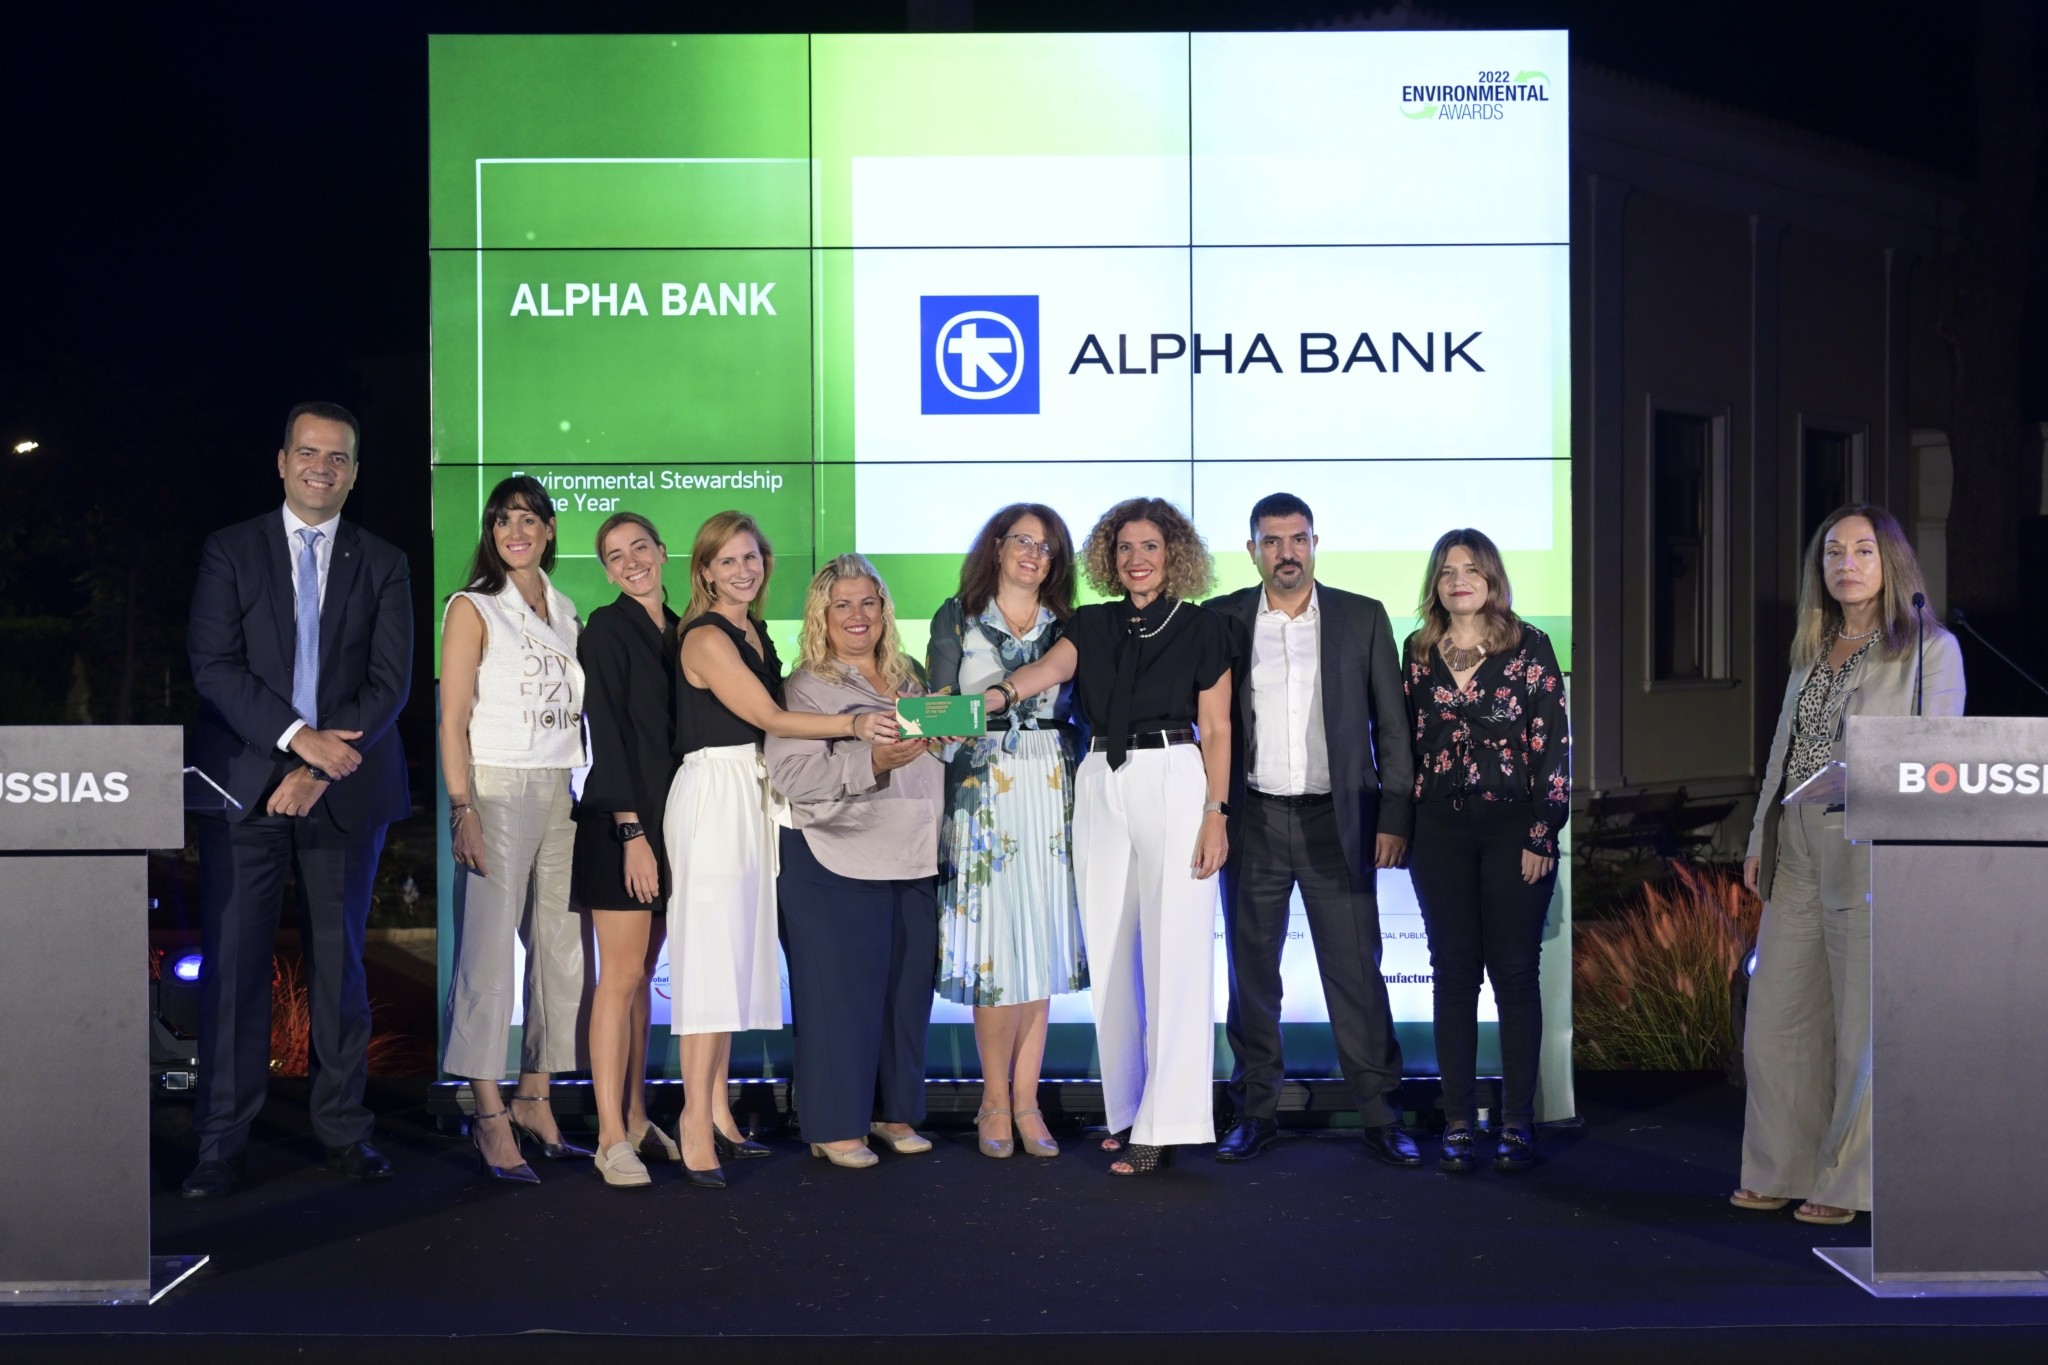 Environmental Awards 2022: Κορυφαία επίδοση για την Alpha Bank με 6 βραβεία